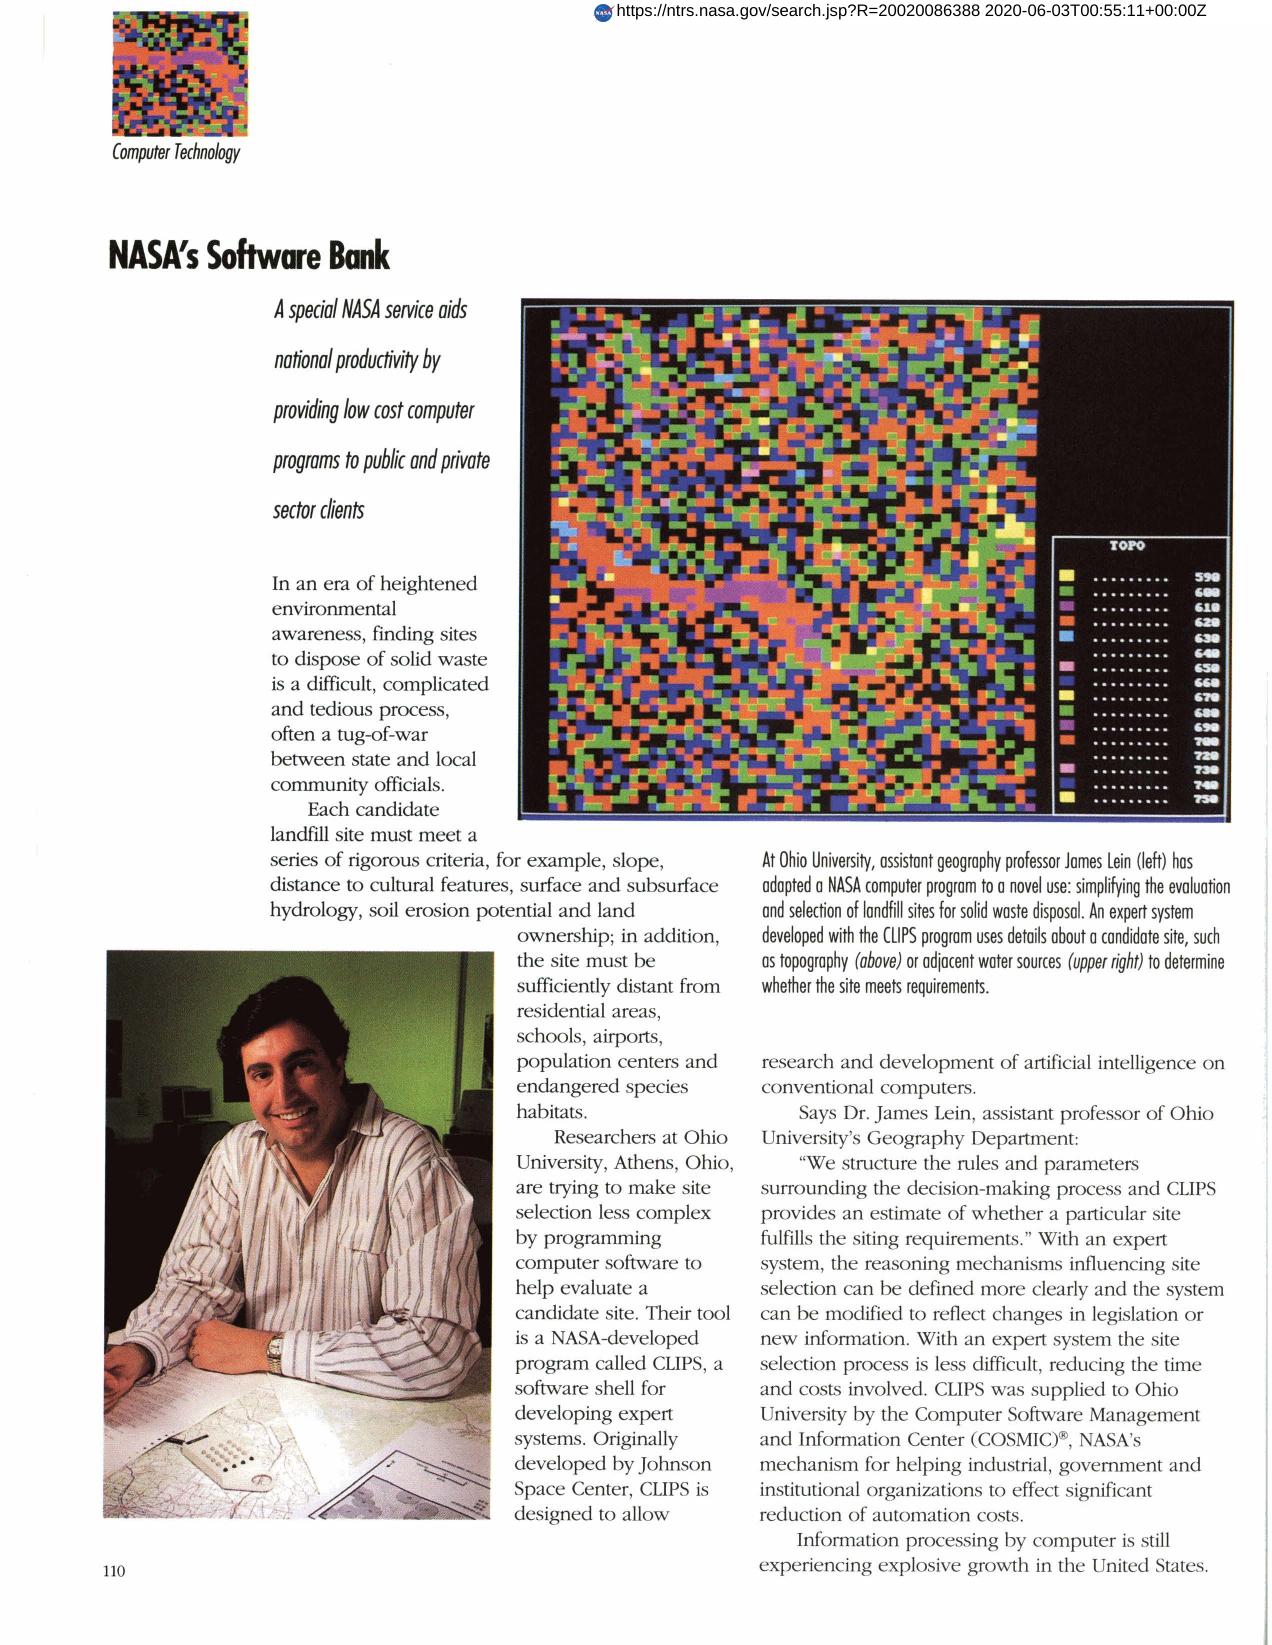 NASA's Software Bank (Cassegrain Feed System)